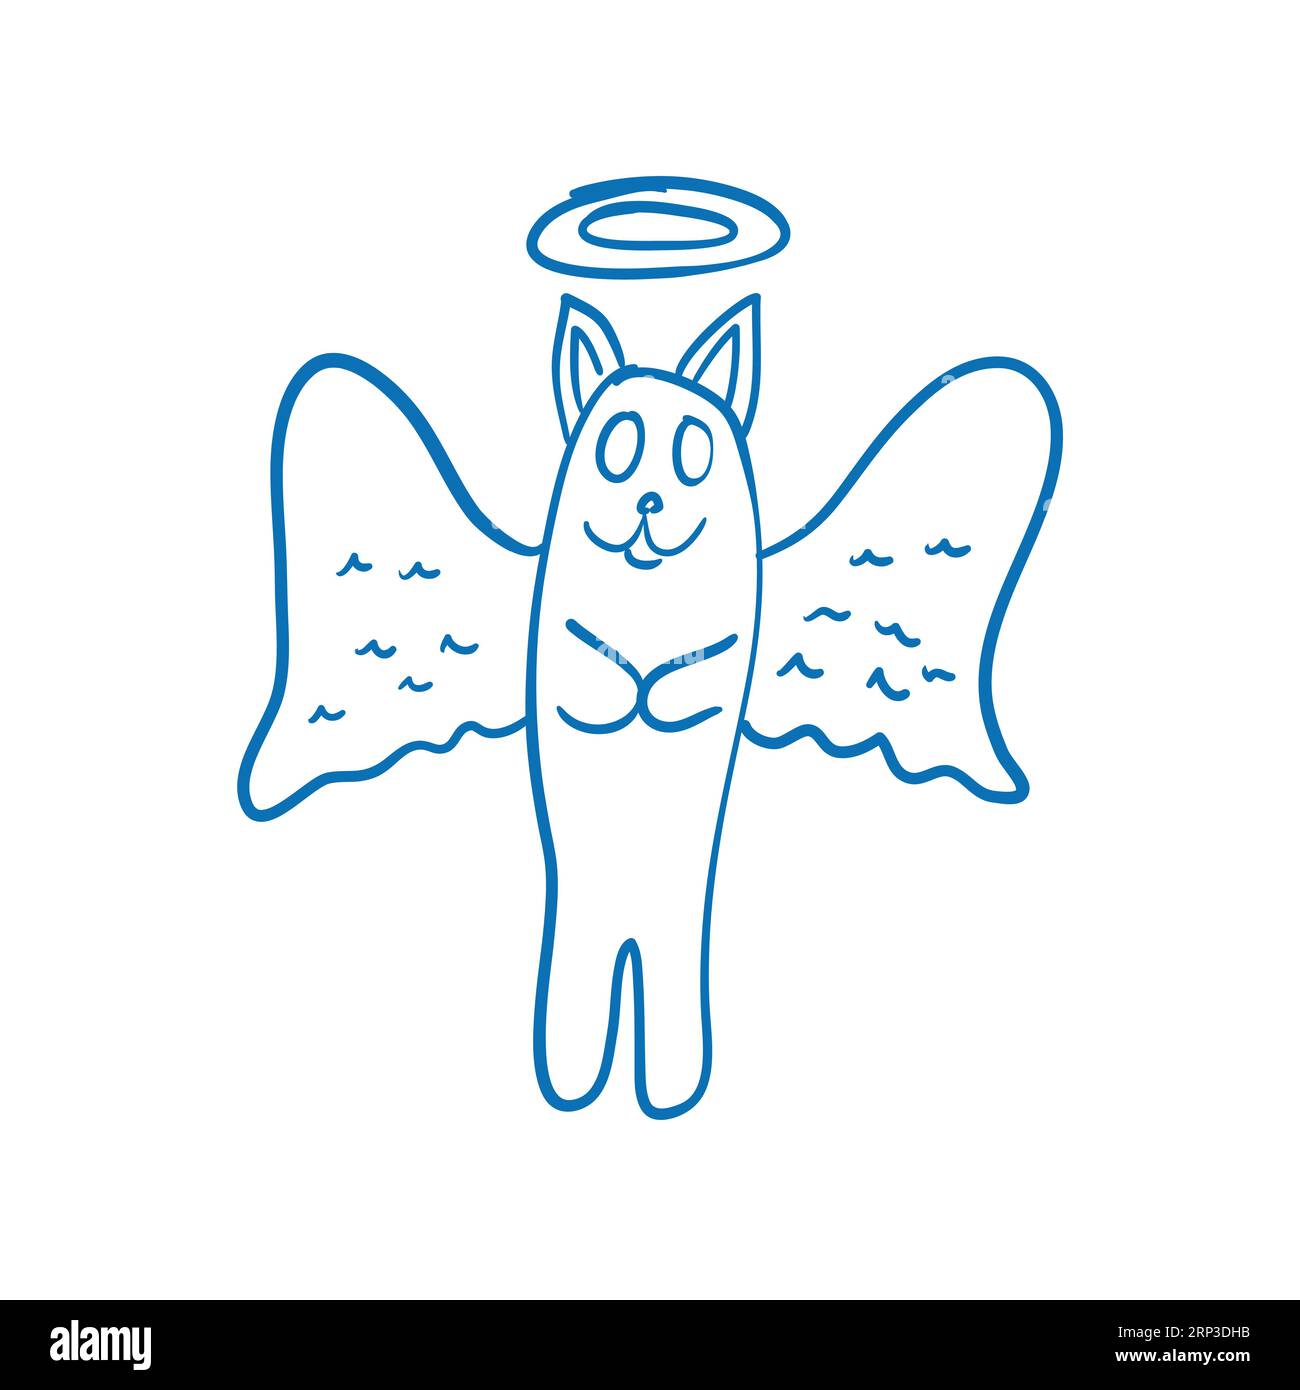 Pet Memorial, Angel Wings Shih Tzu Dog Silhouette Vector Stock Vector